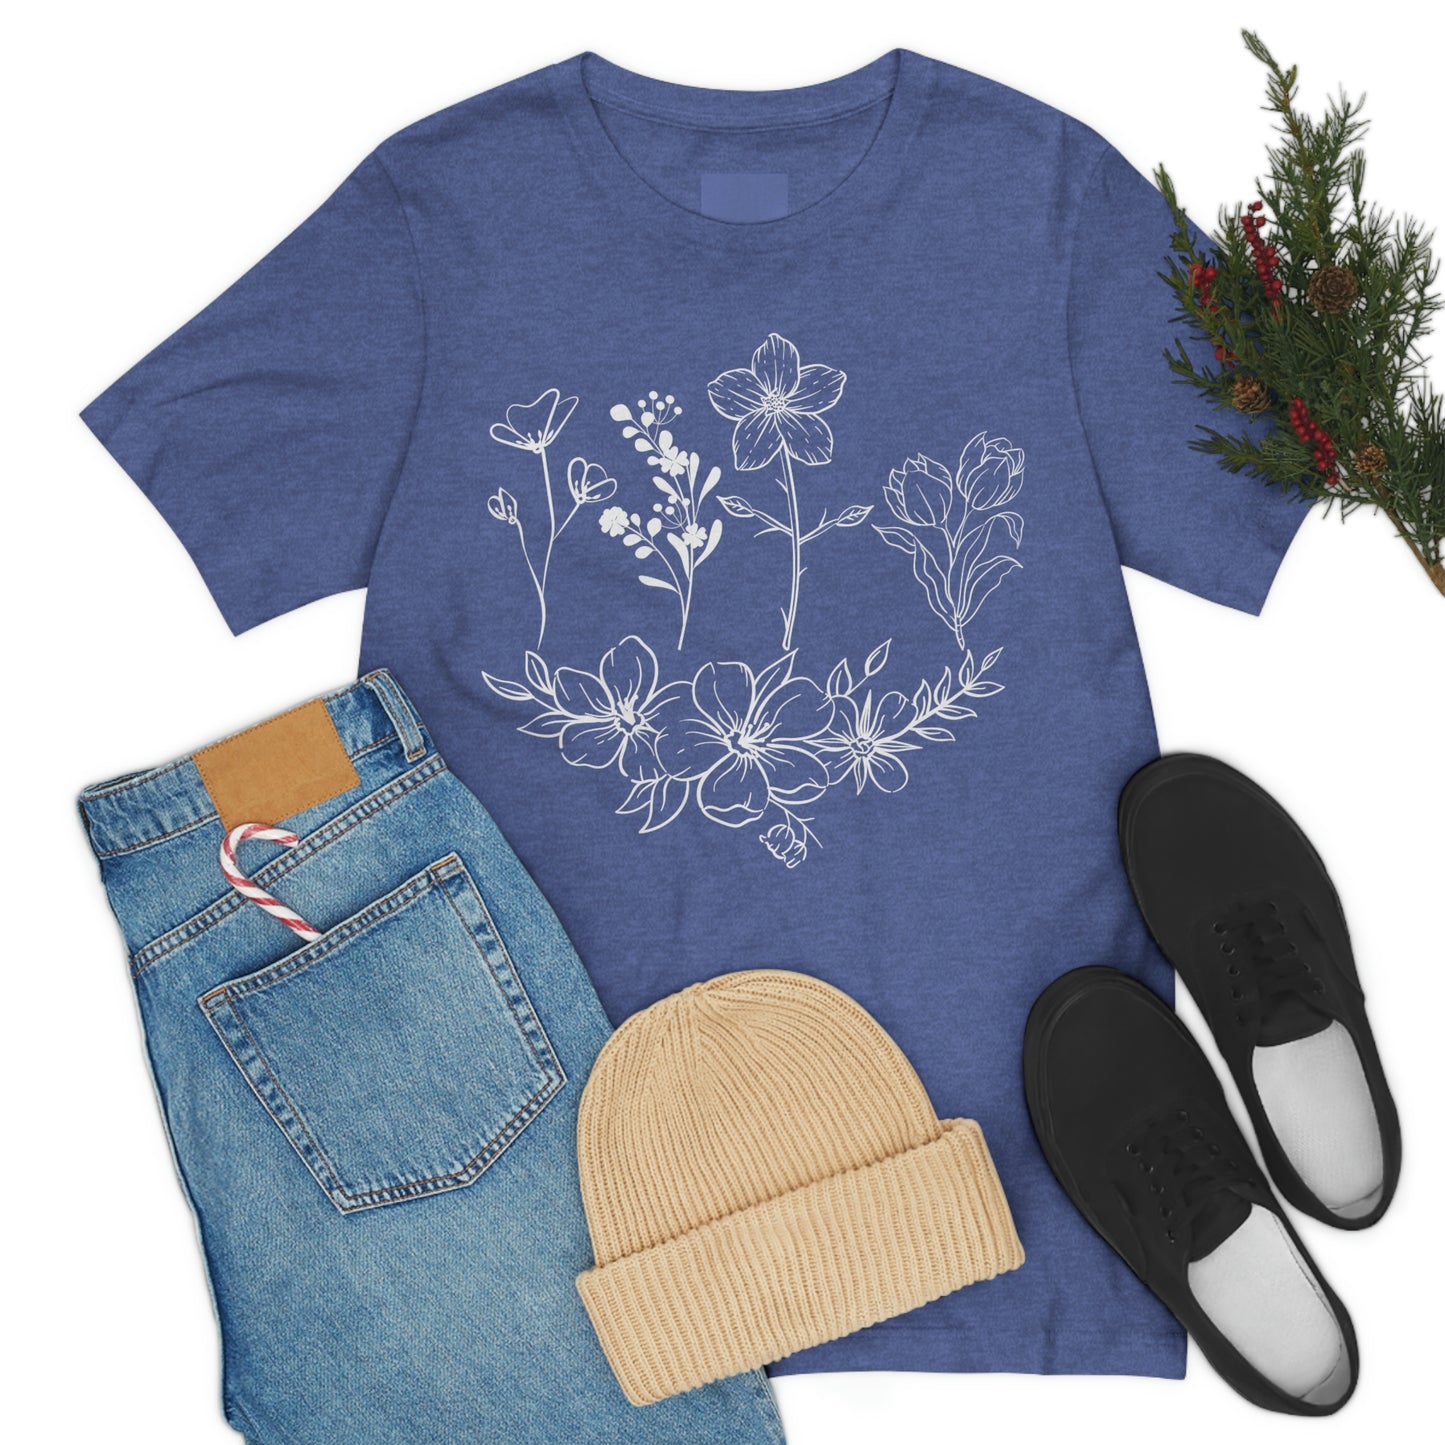 Flower Tshirt - Nature lover Shirt